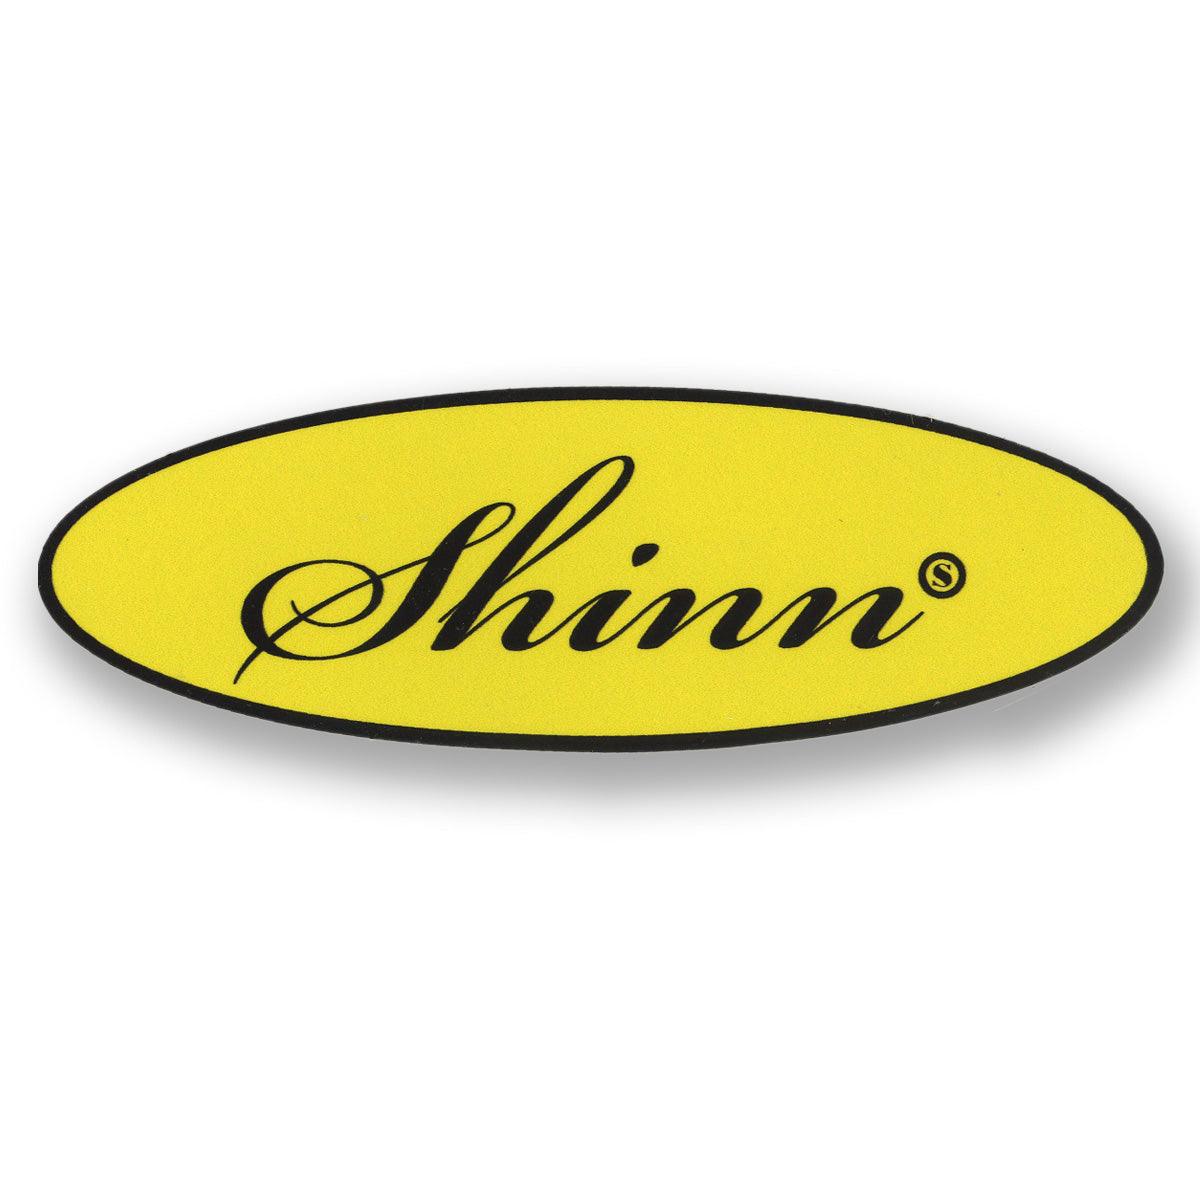 Shinn Kiteboarding Oval Sticker - Kiteshop.com